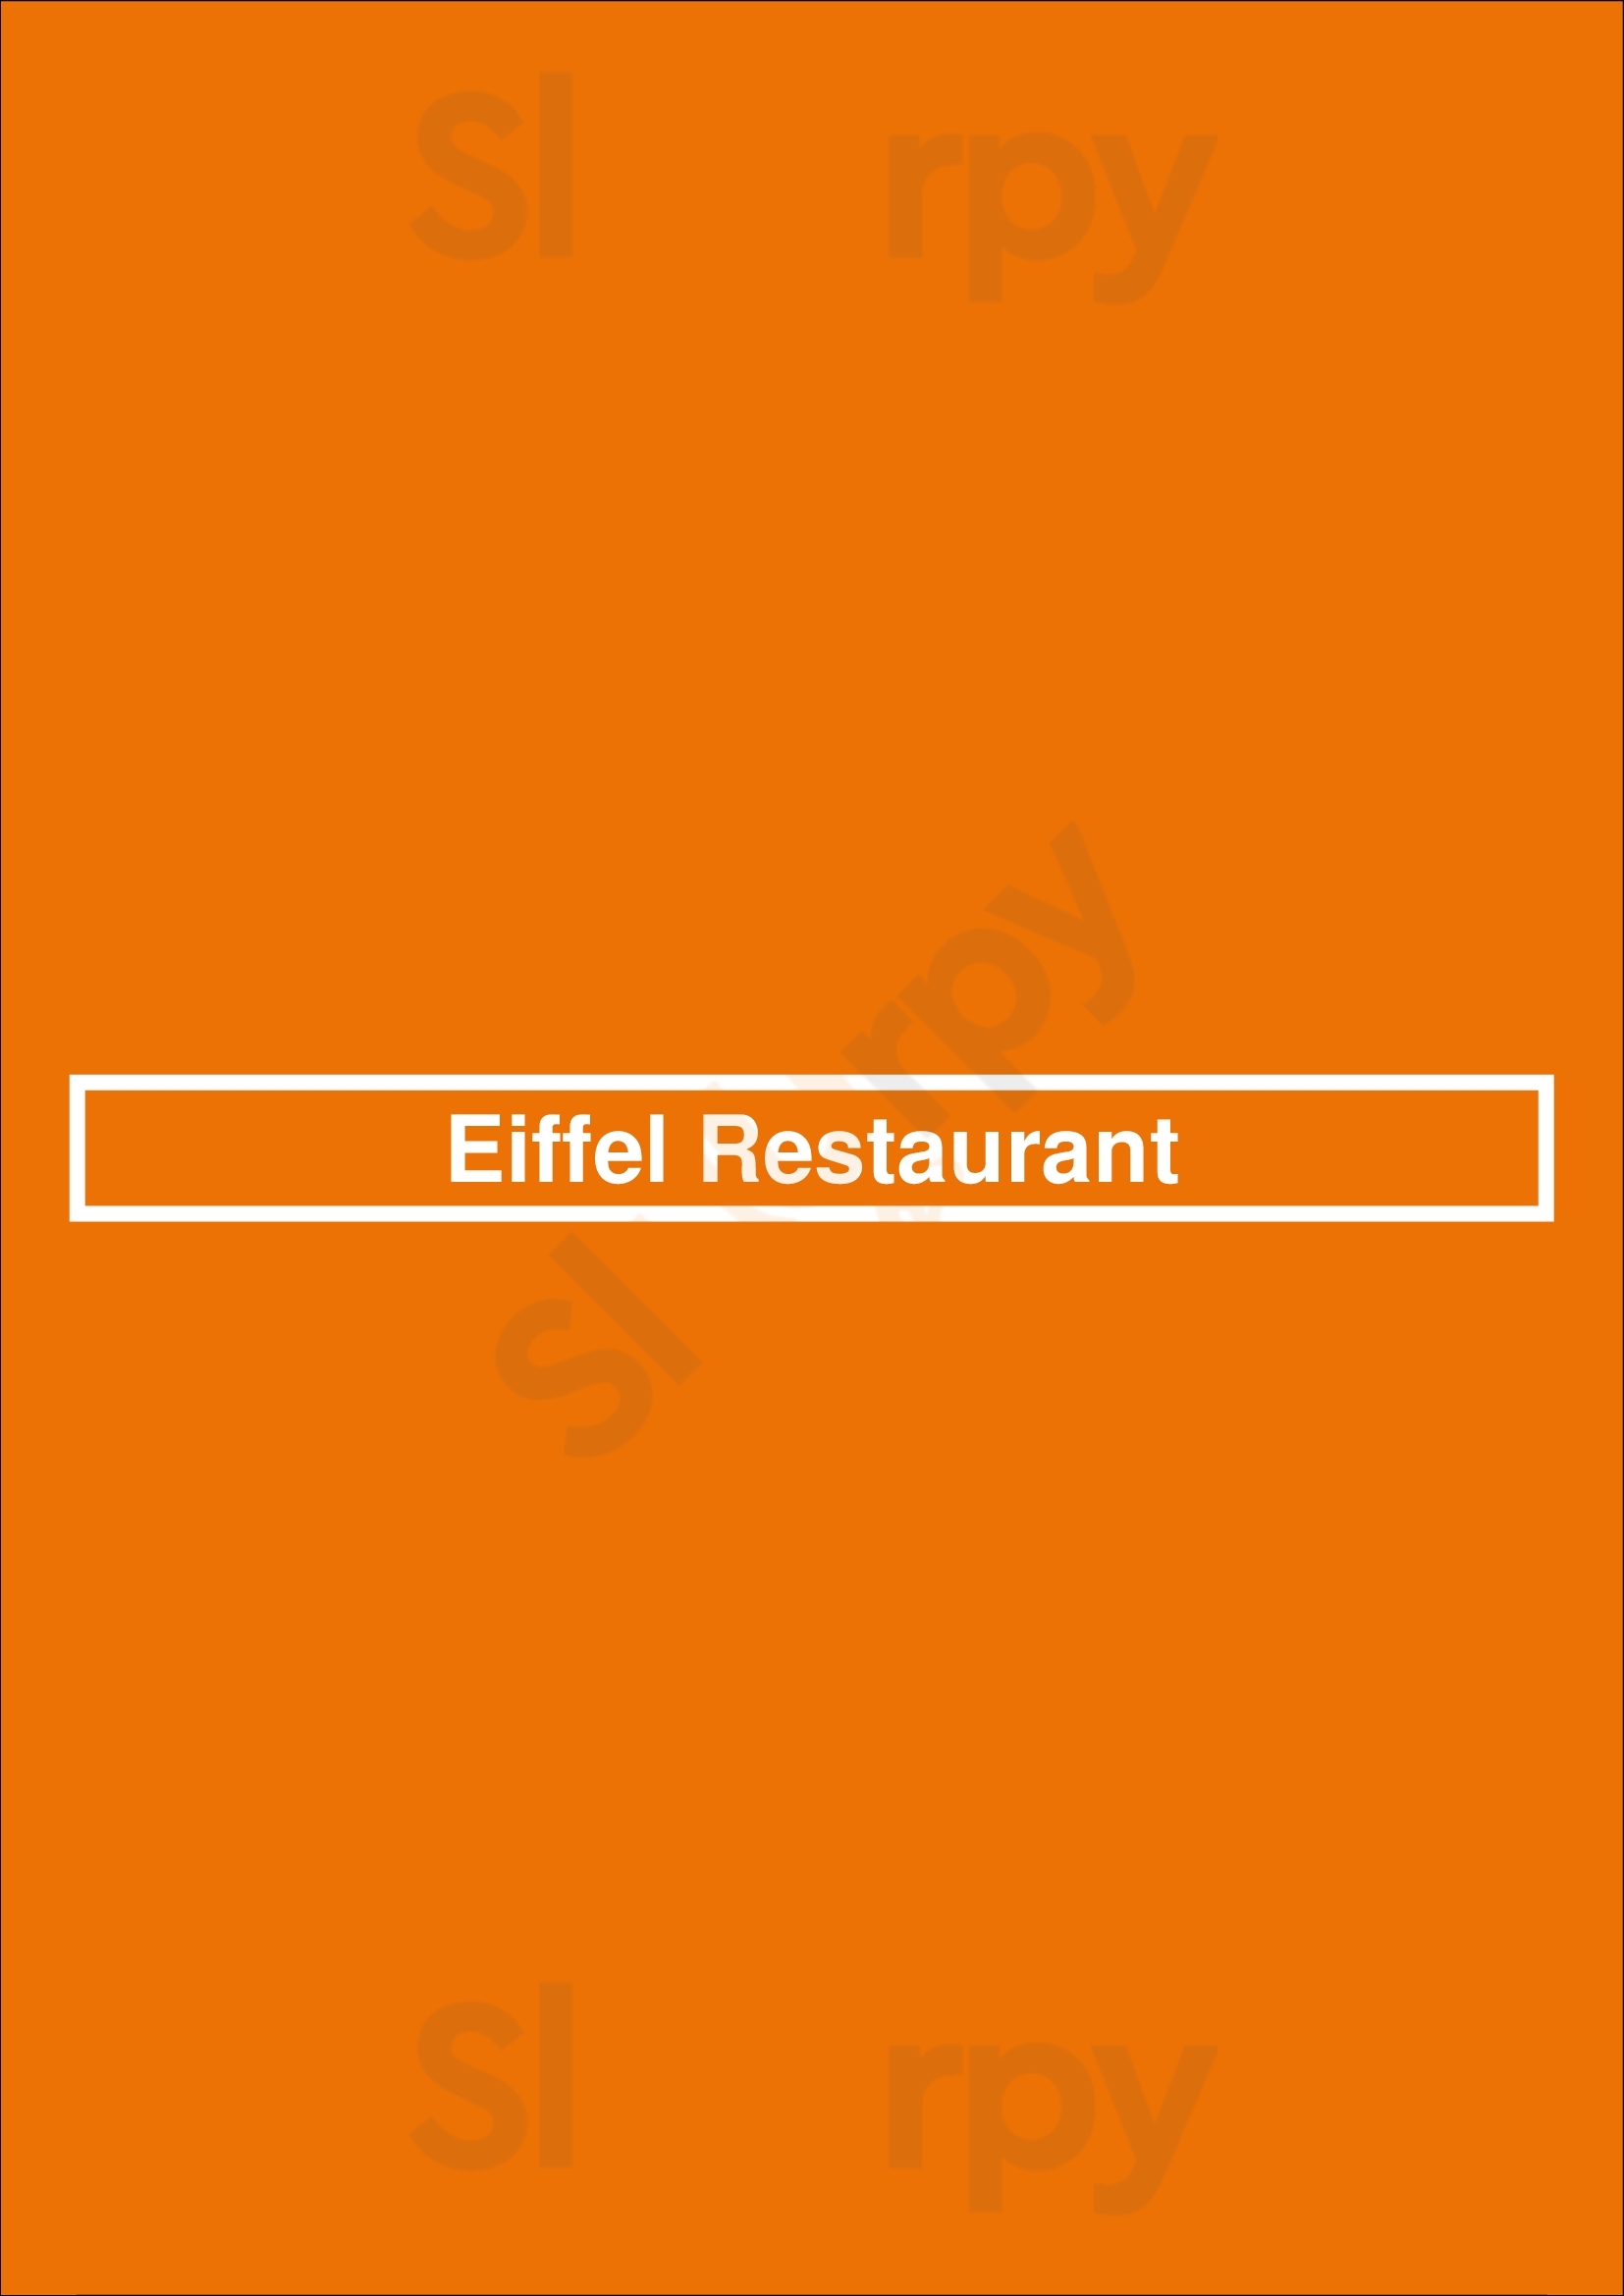 Eiffel Restaurant Brisbane Menu - 1